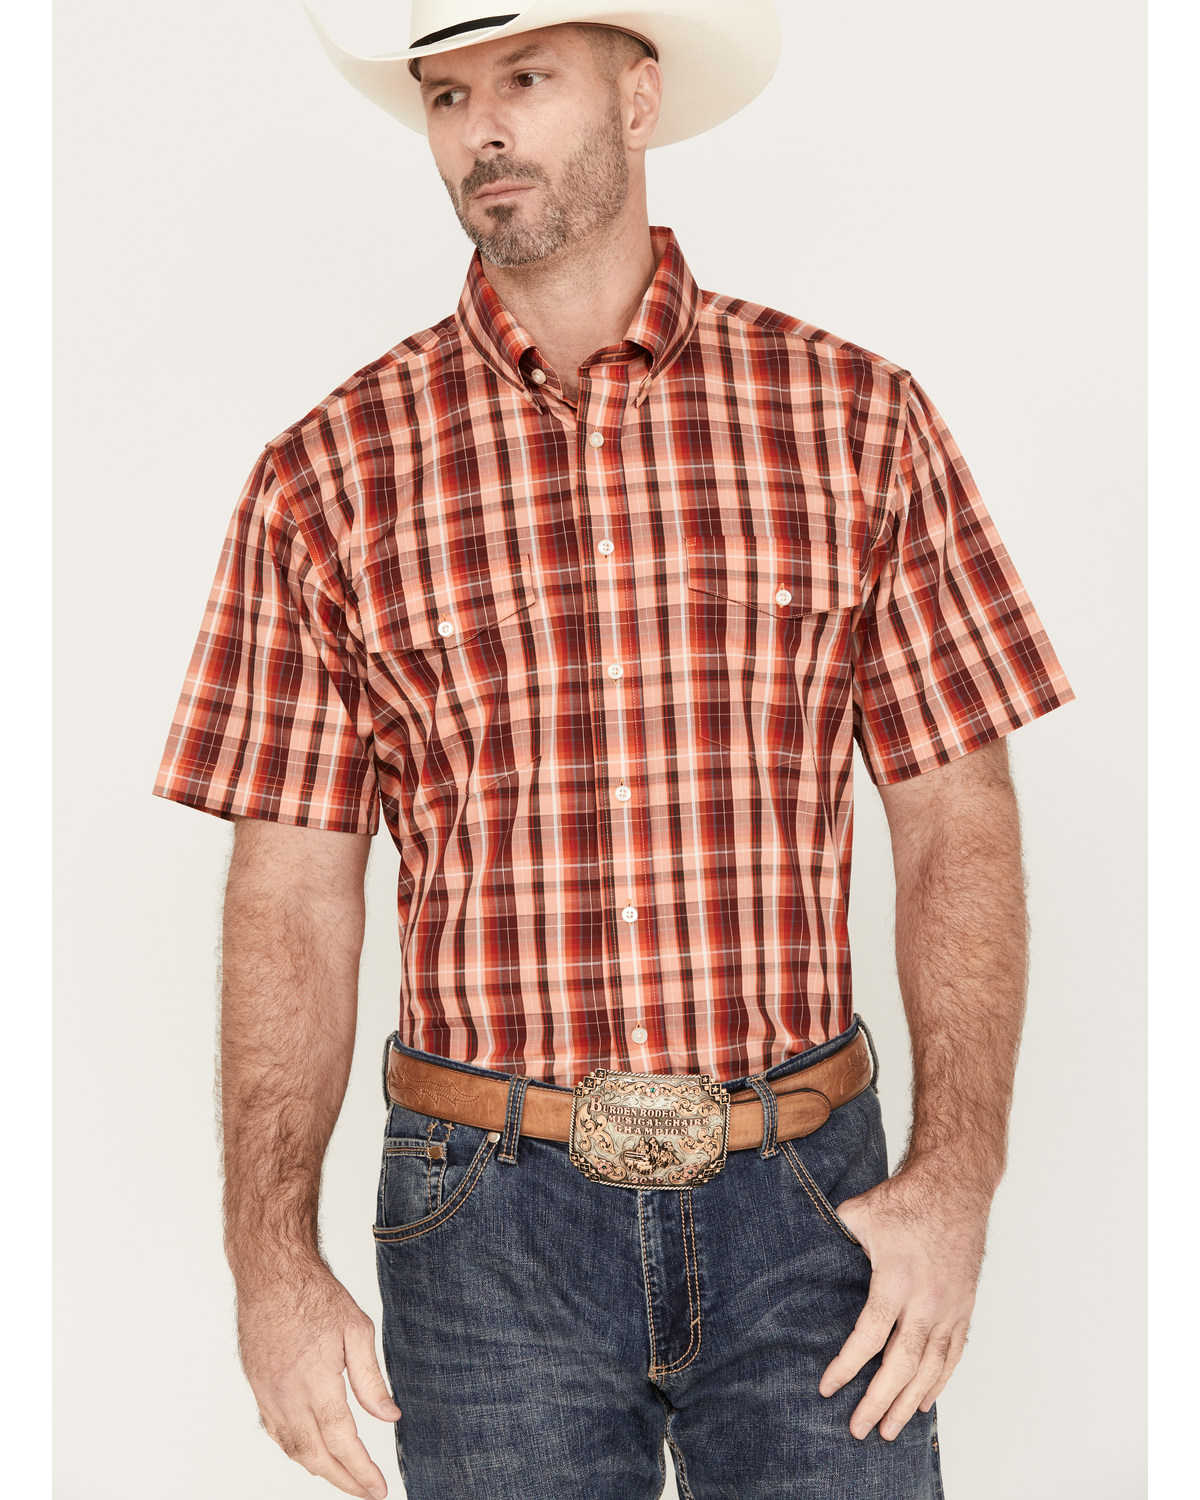 Panhandle Select Men's Plaid Print Short Sleeve Button-Down Western Shirt